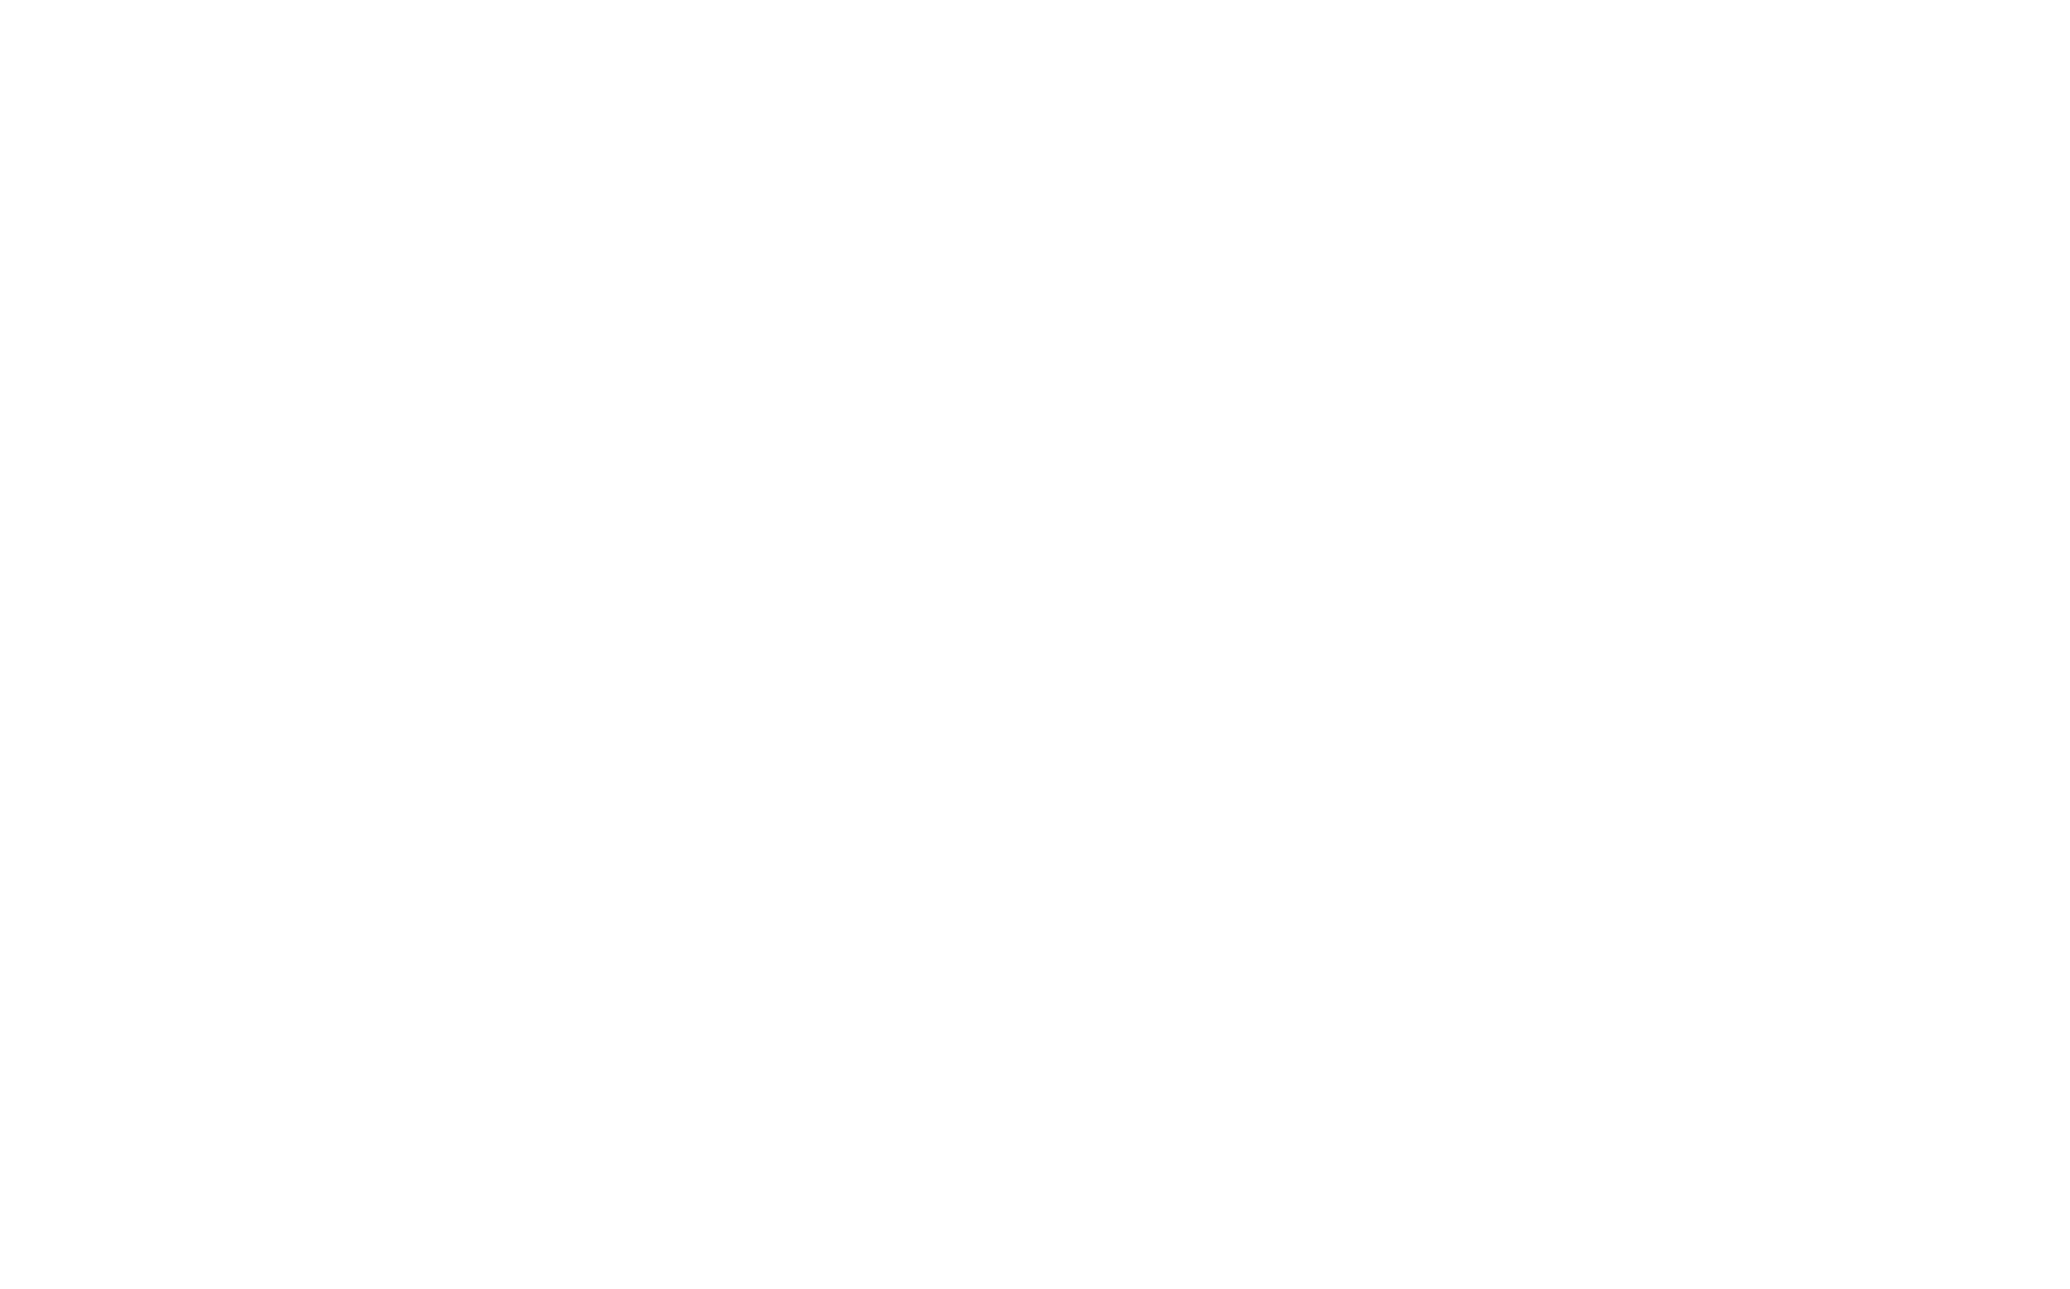 A Cinderella Story: Starstruck logo